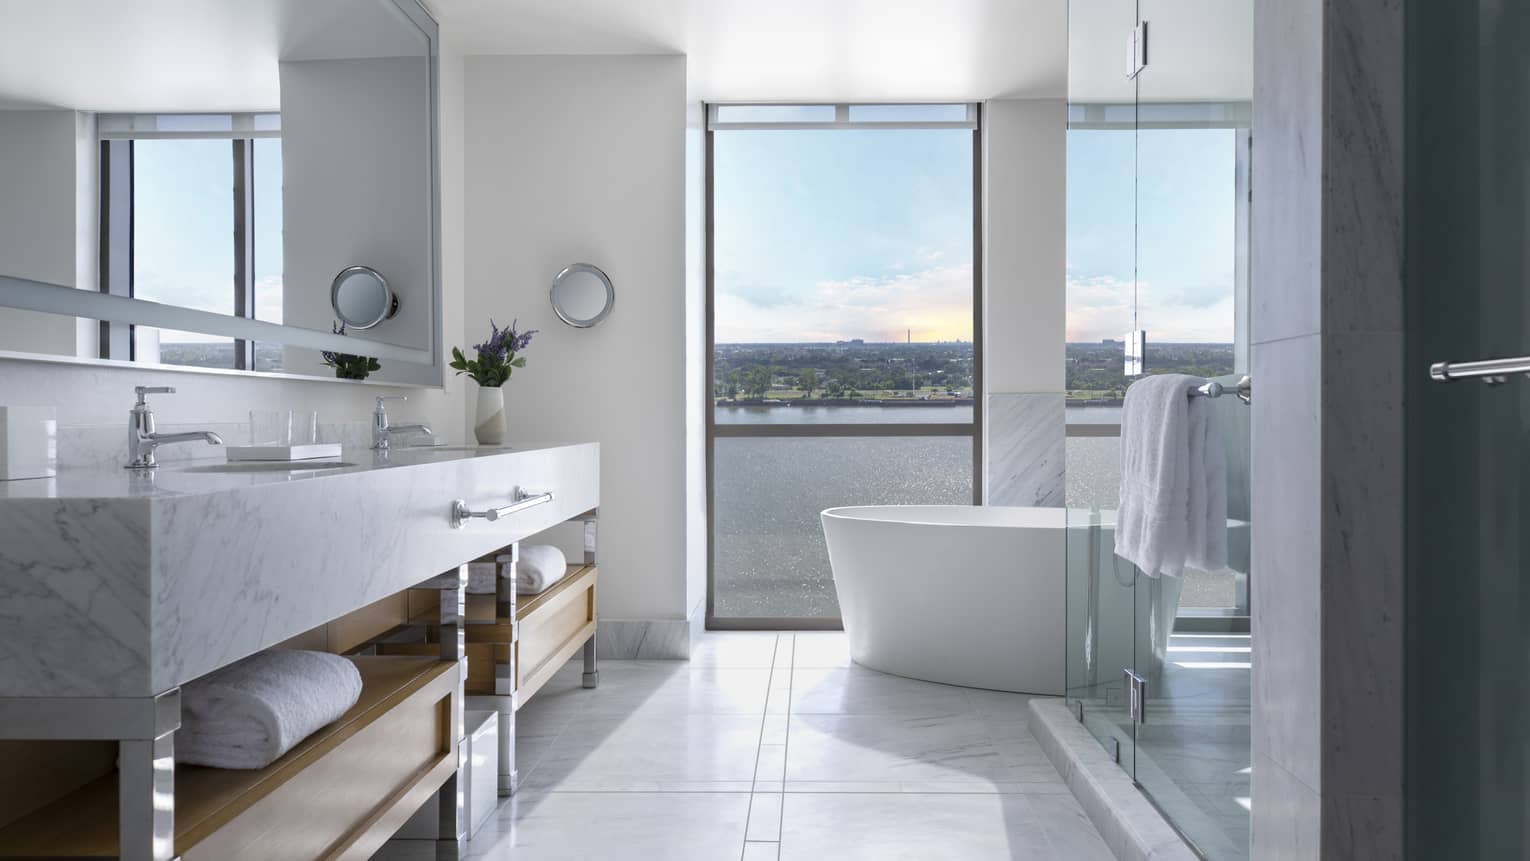 Guest room bathroom with marbled double vanity, full-width mirror, large soaking tub, floor-to-ceiling window